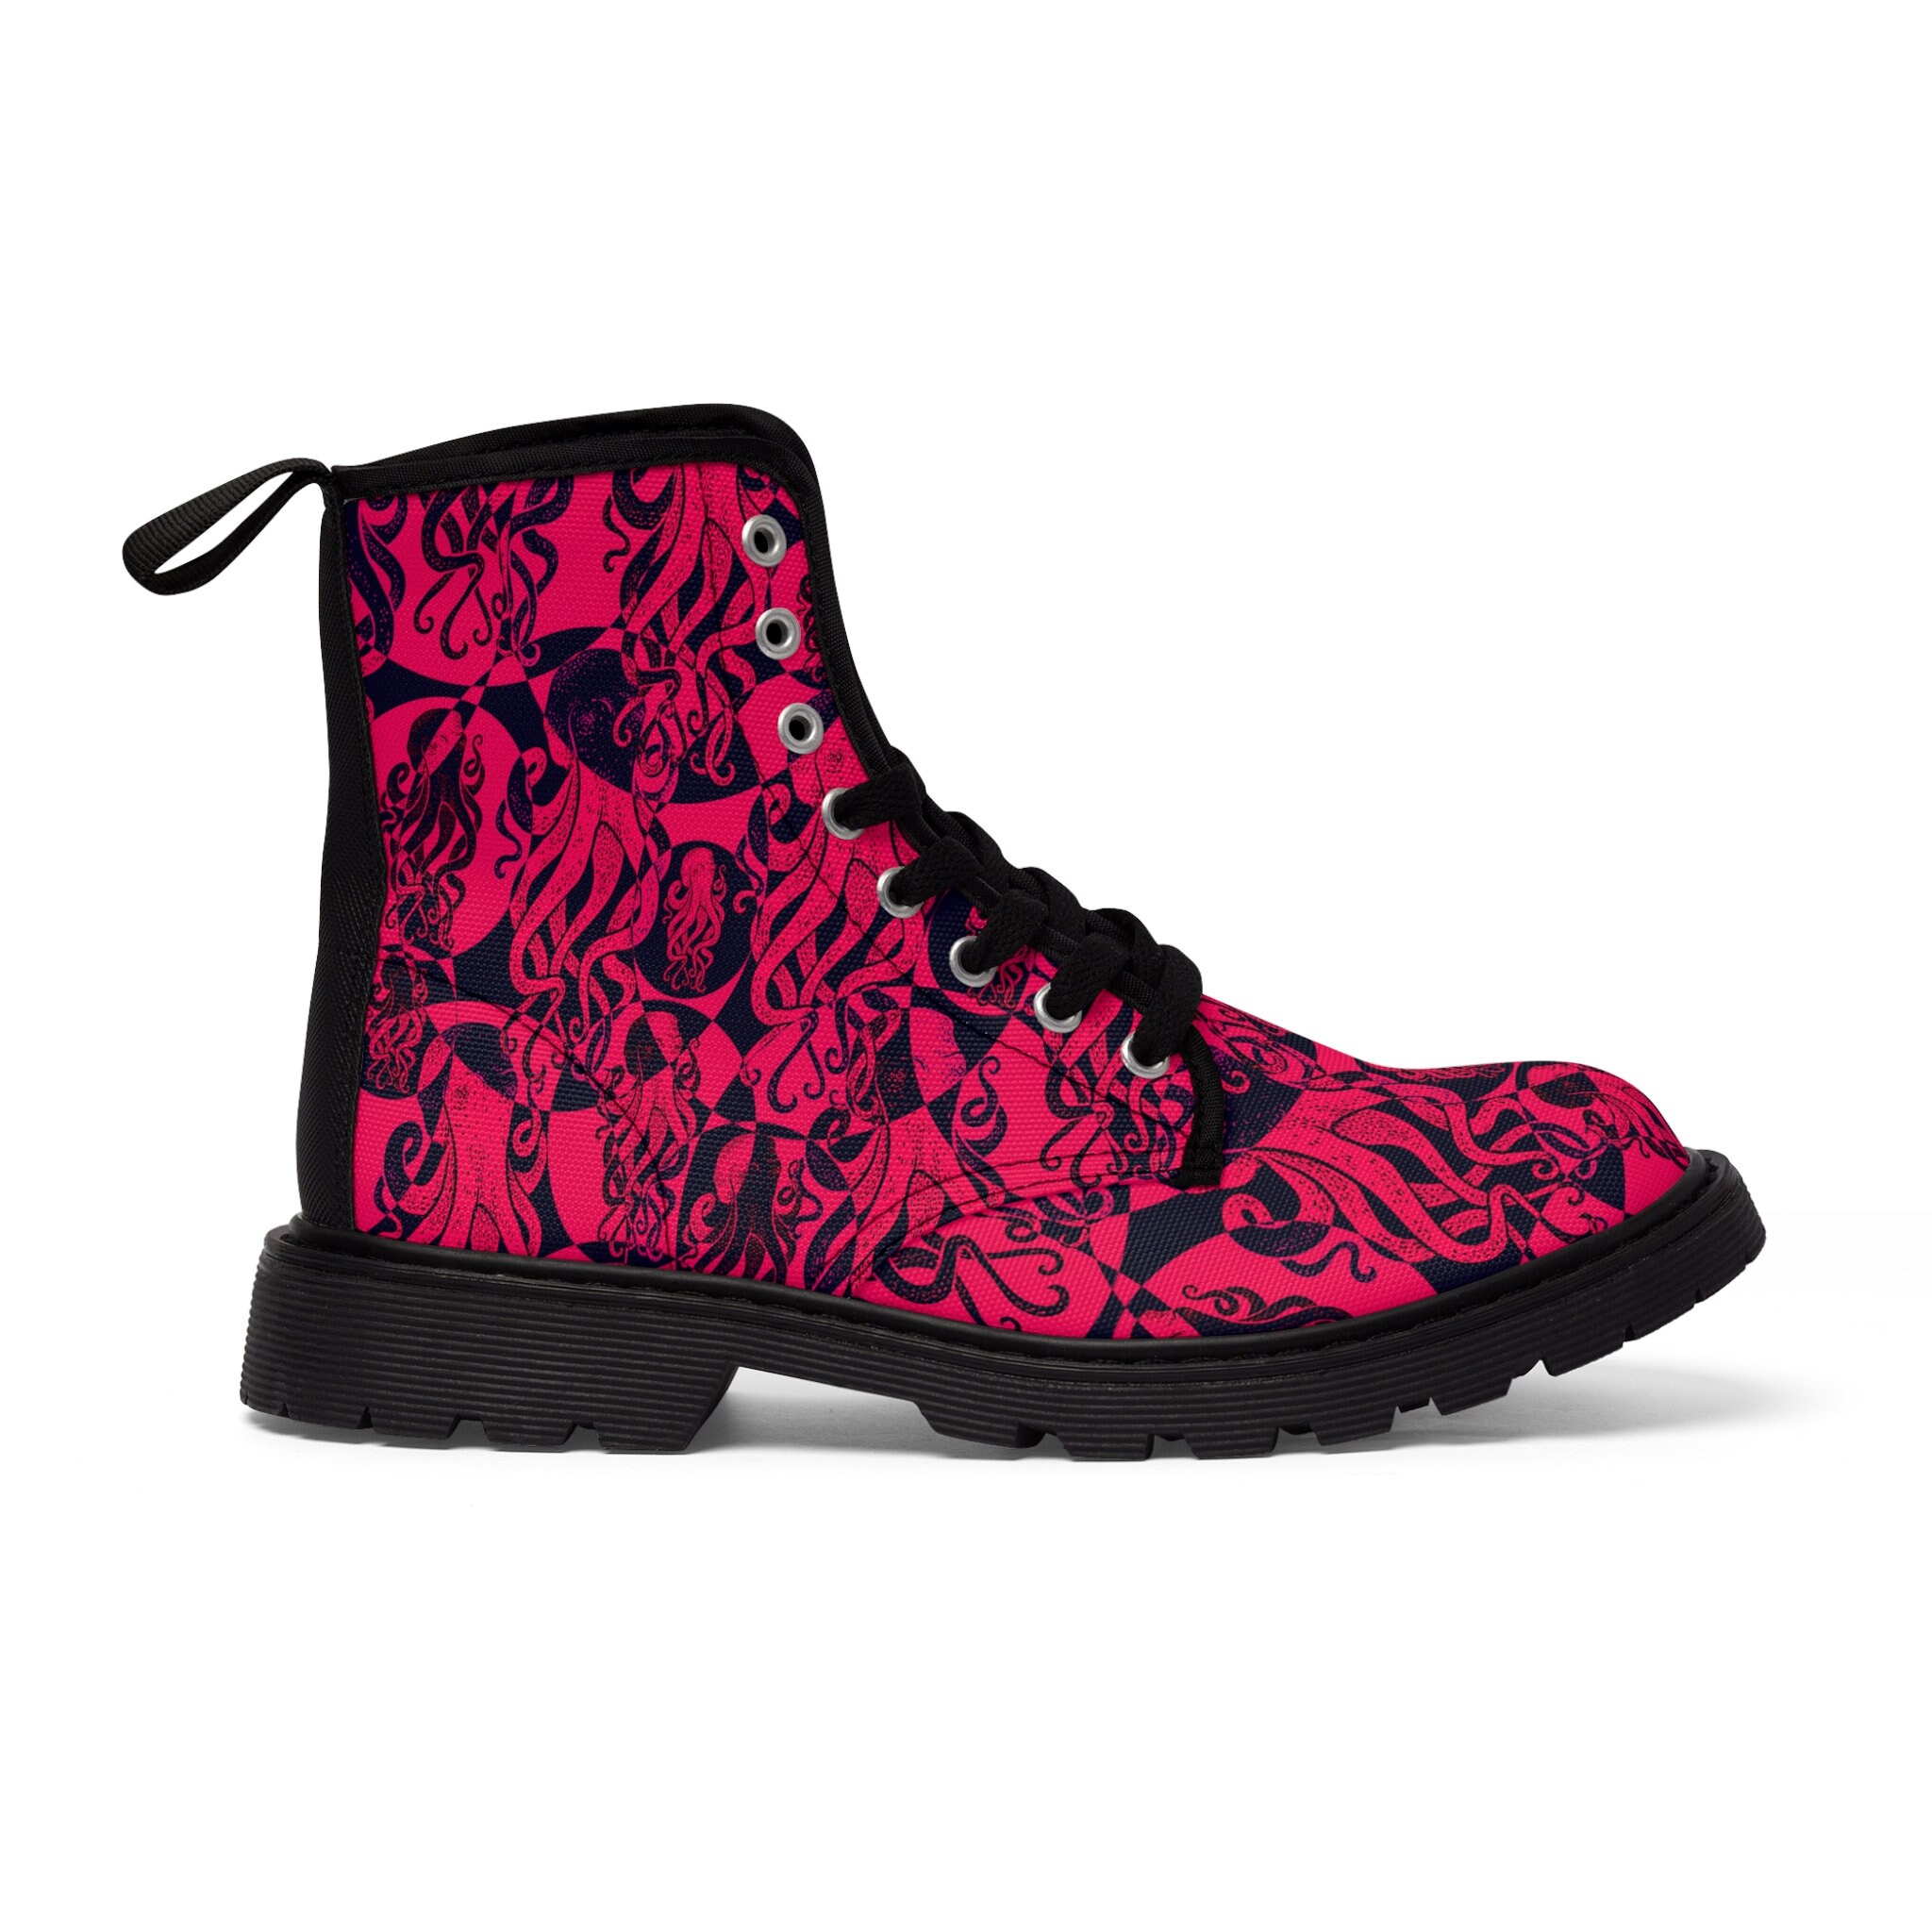 Men's Canvas Boots Pink Octopus Design - Etsy